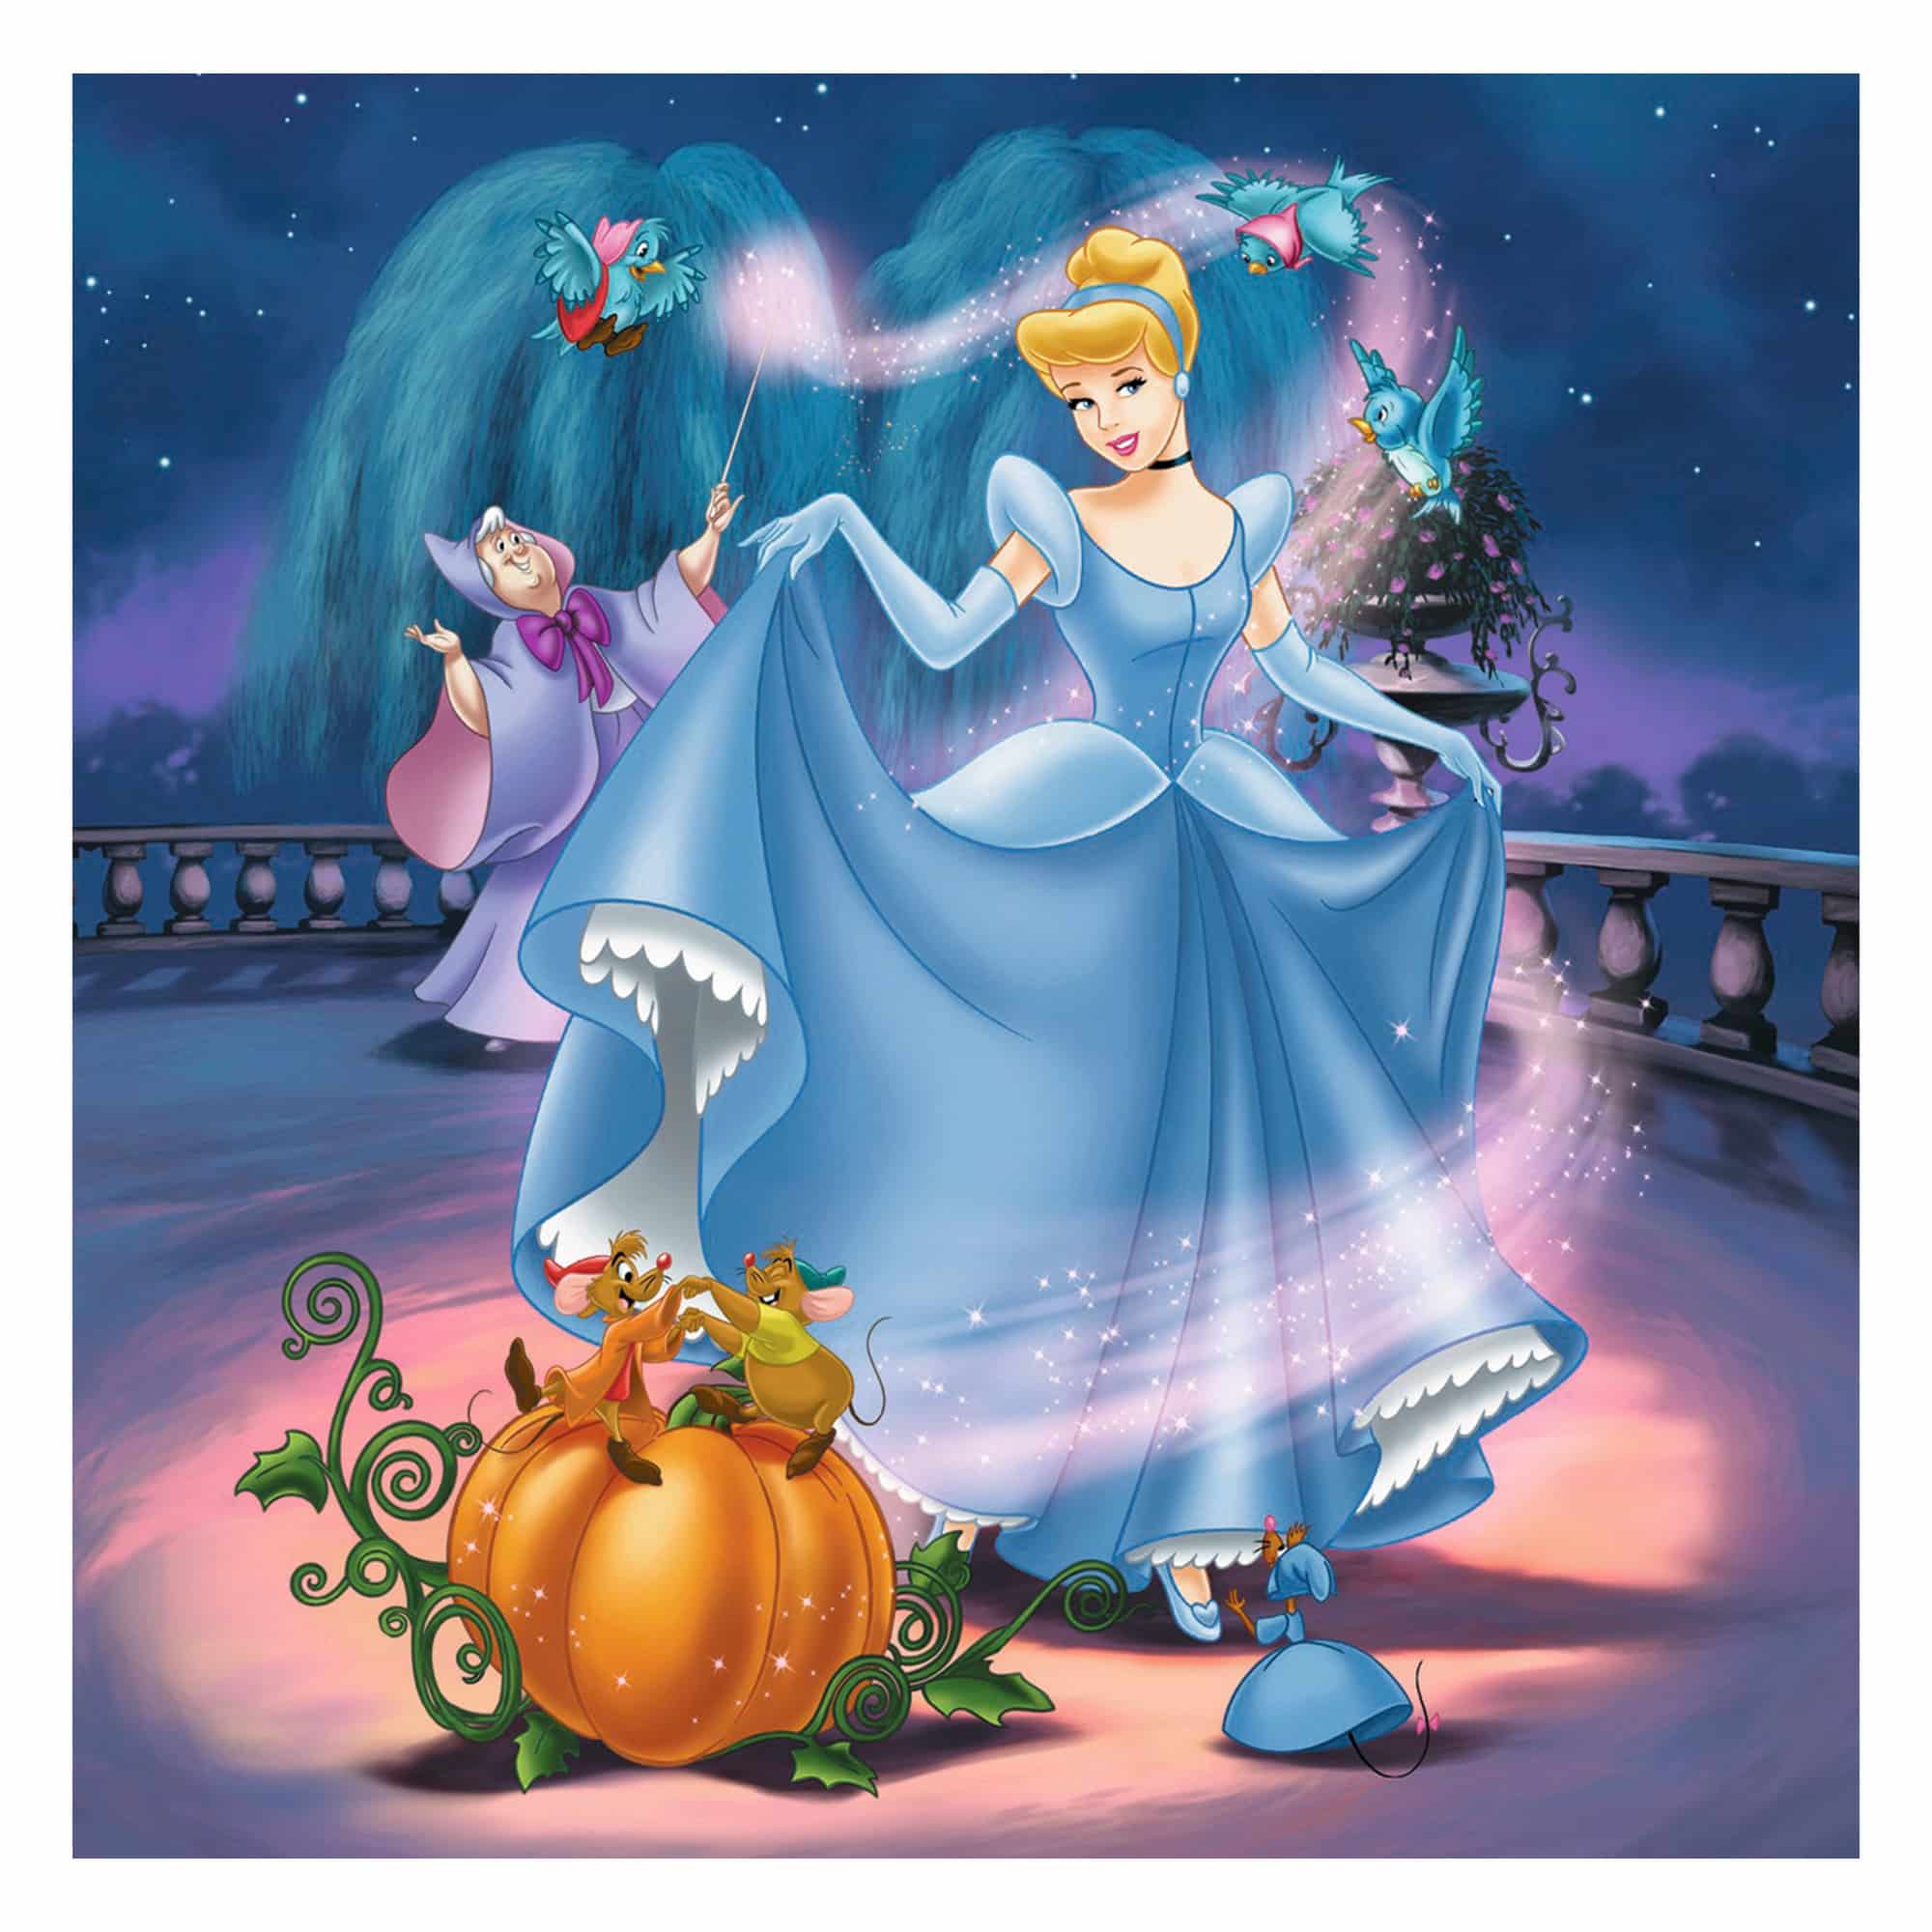 Ravensburger Puzzle - Snow White, Cinderella, Ariel, 3x49 Pieces - Playpolis